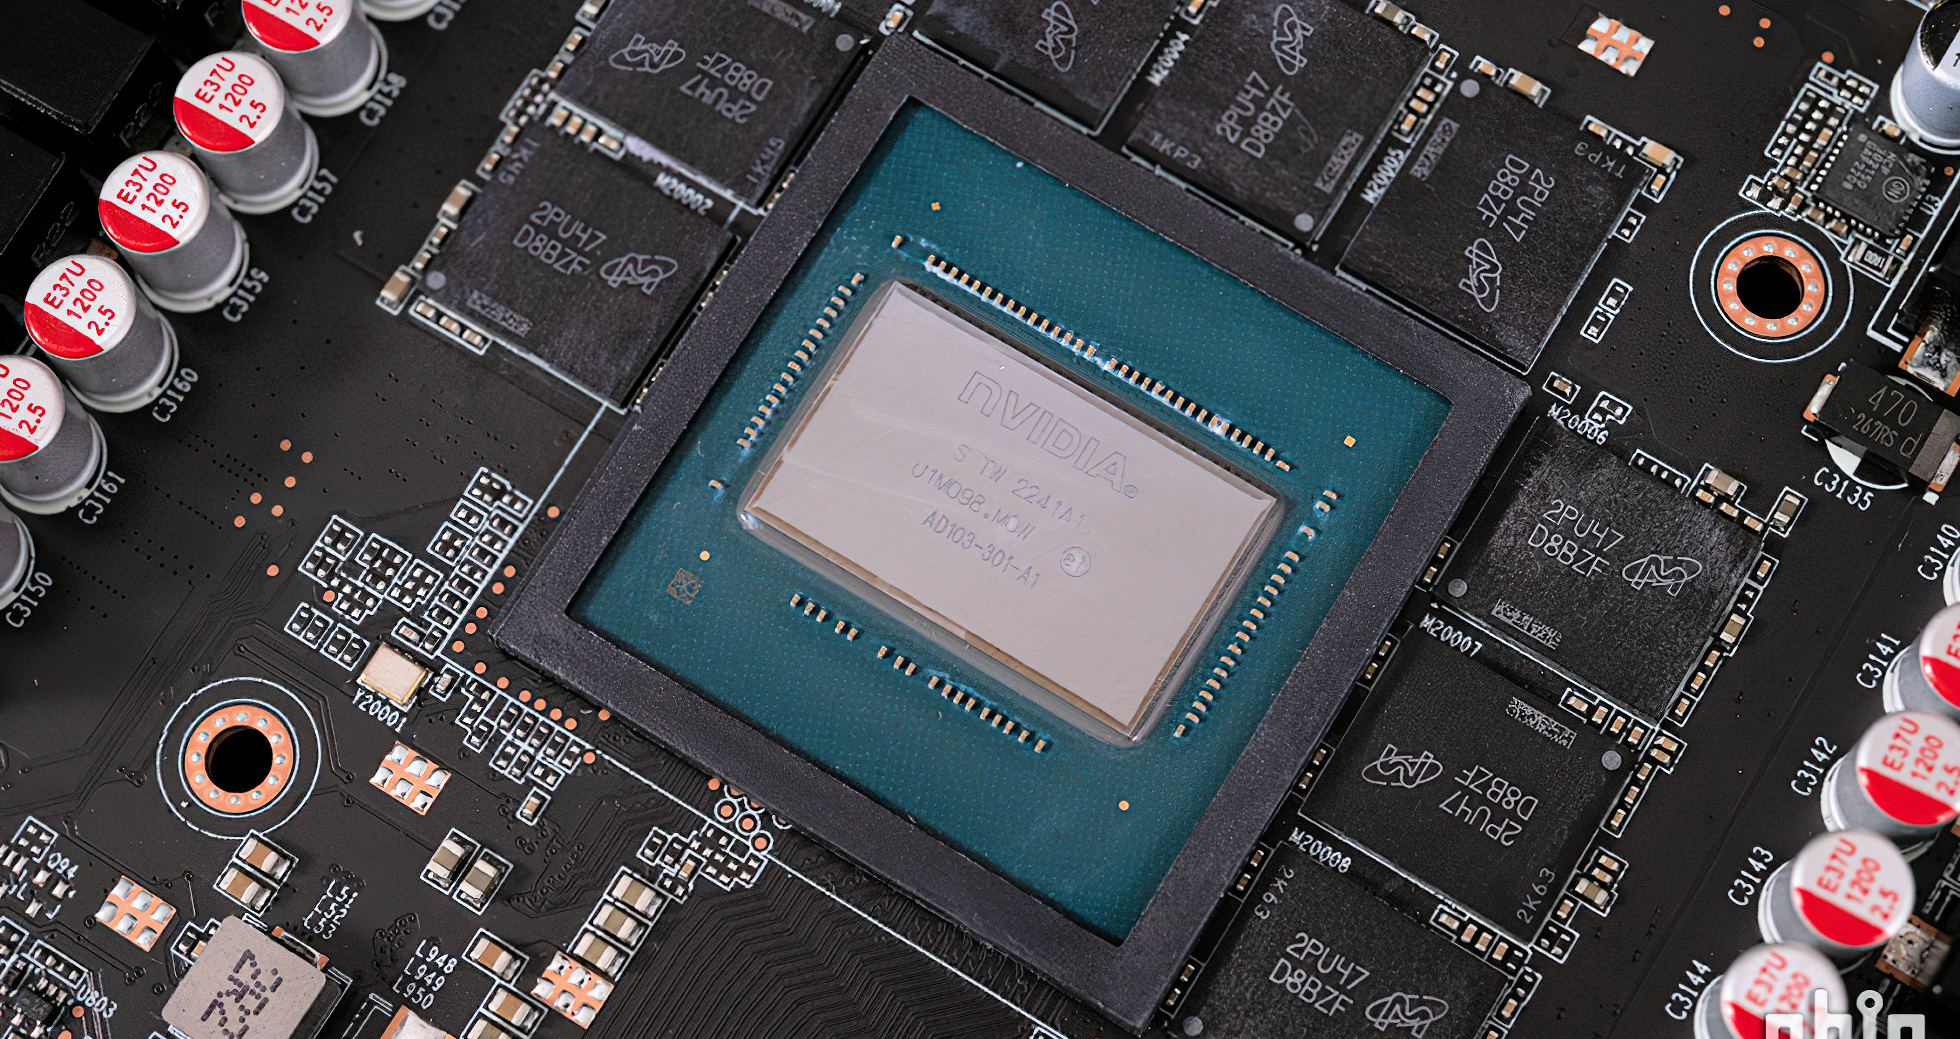 Nvidia begins shipping GeForce RTX 4080 AD103-301 GPU to AIB partners